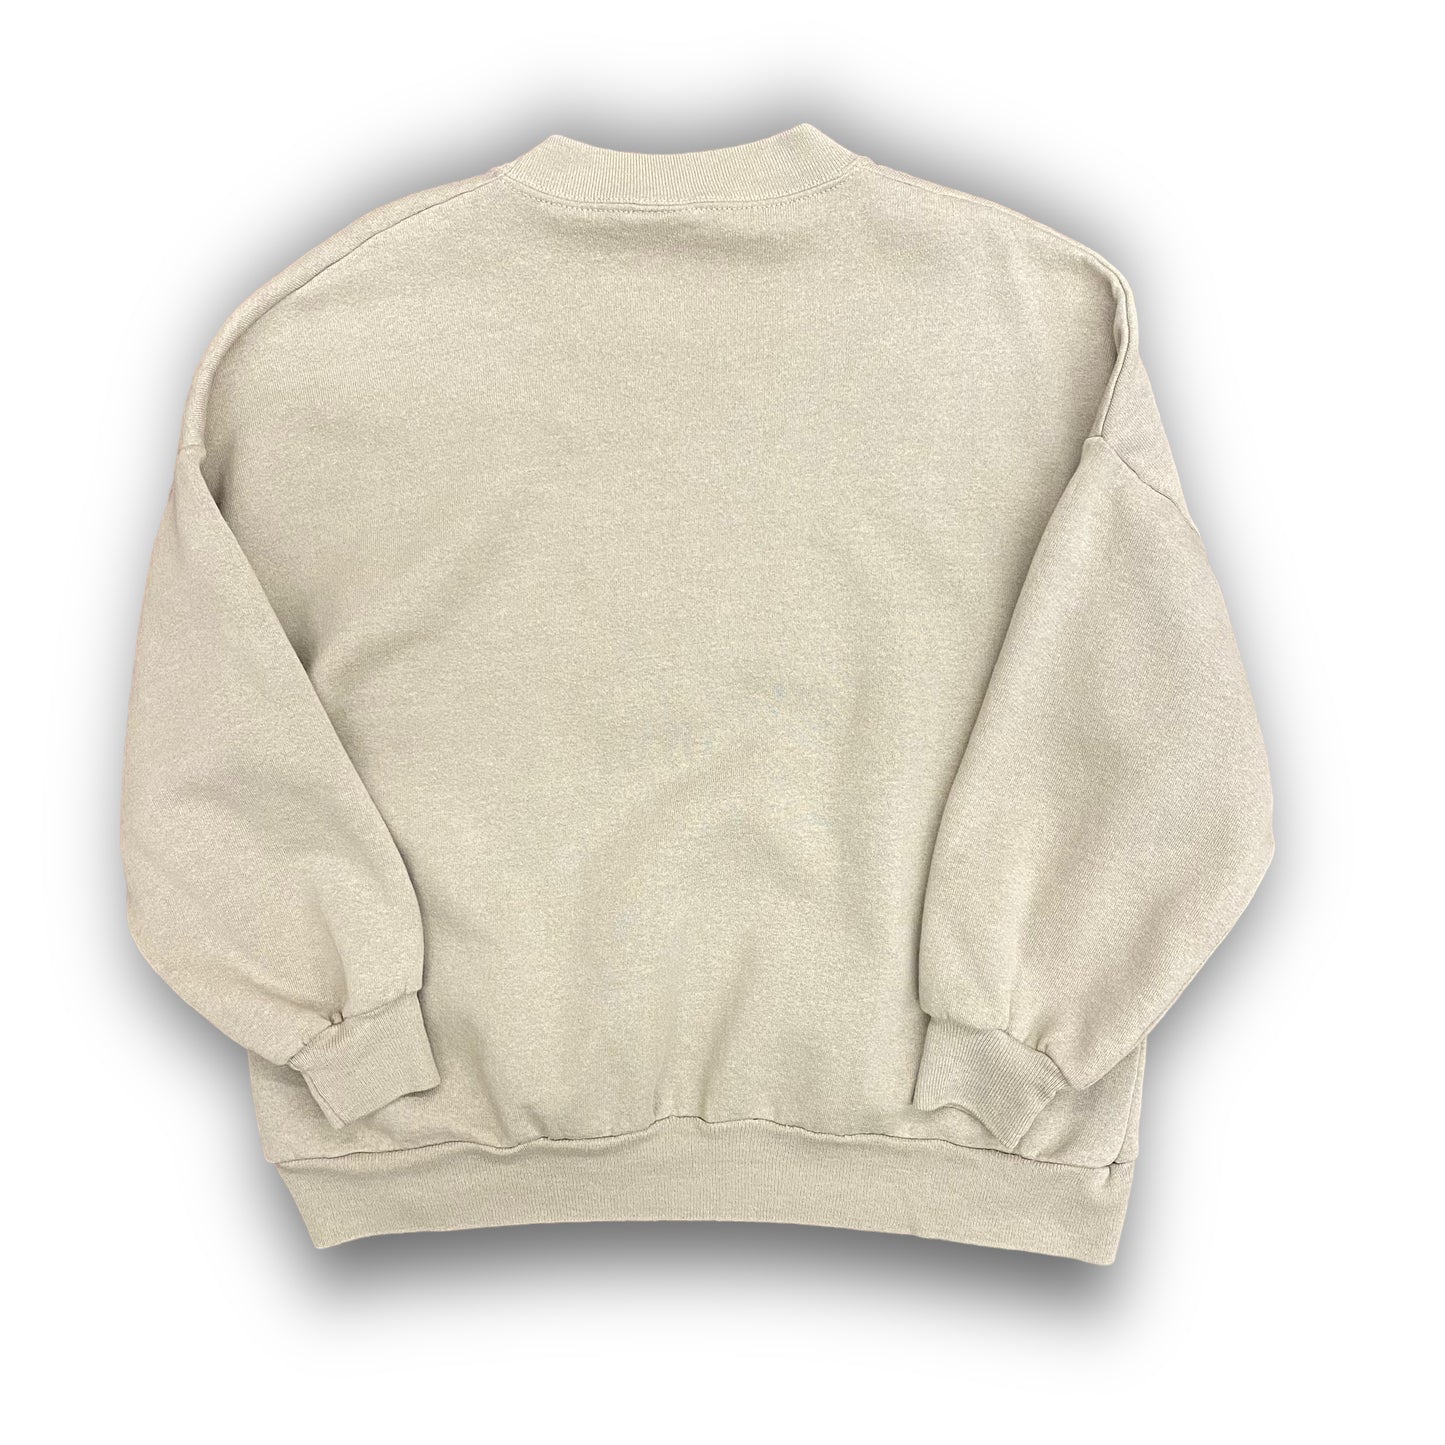 1990s Myrtle Beach Embroidered Tan Crewneck Sweatshirt - Size XL (Fits M/L)